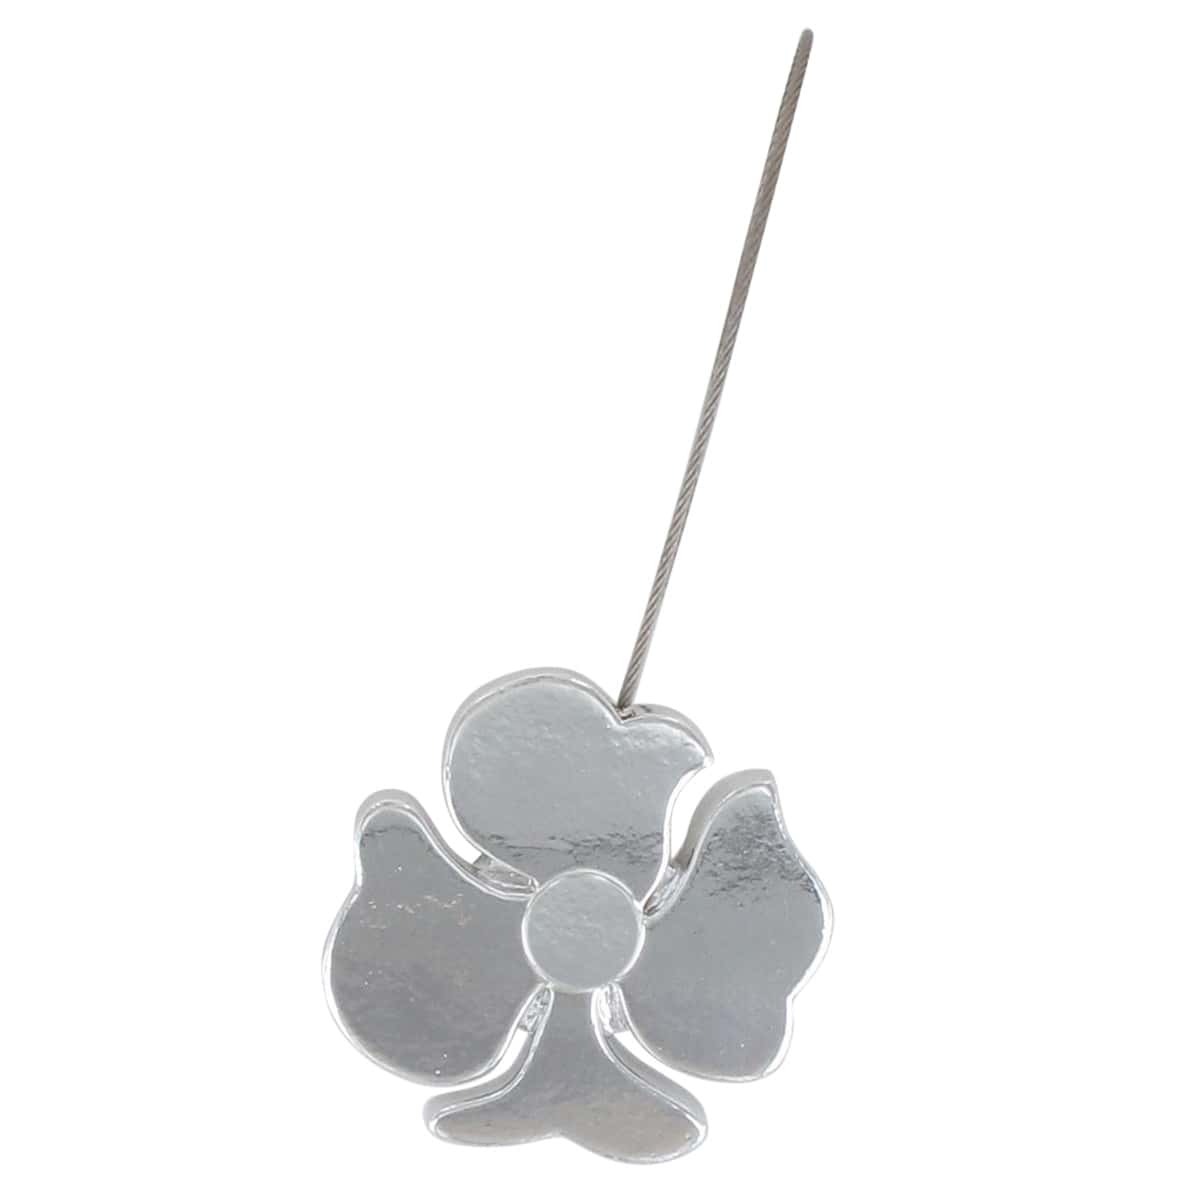 Set of 2 Resin Flower Tieback With Magnet Ines Medium Size